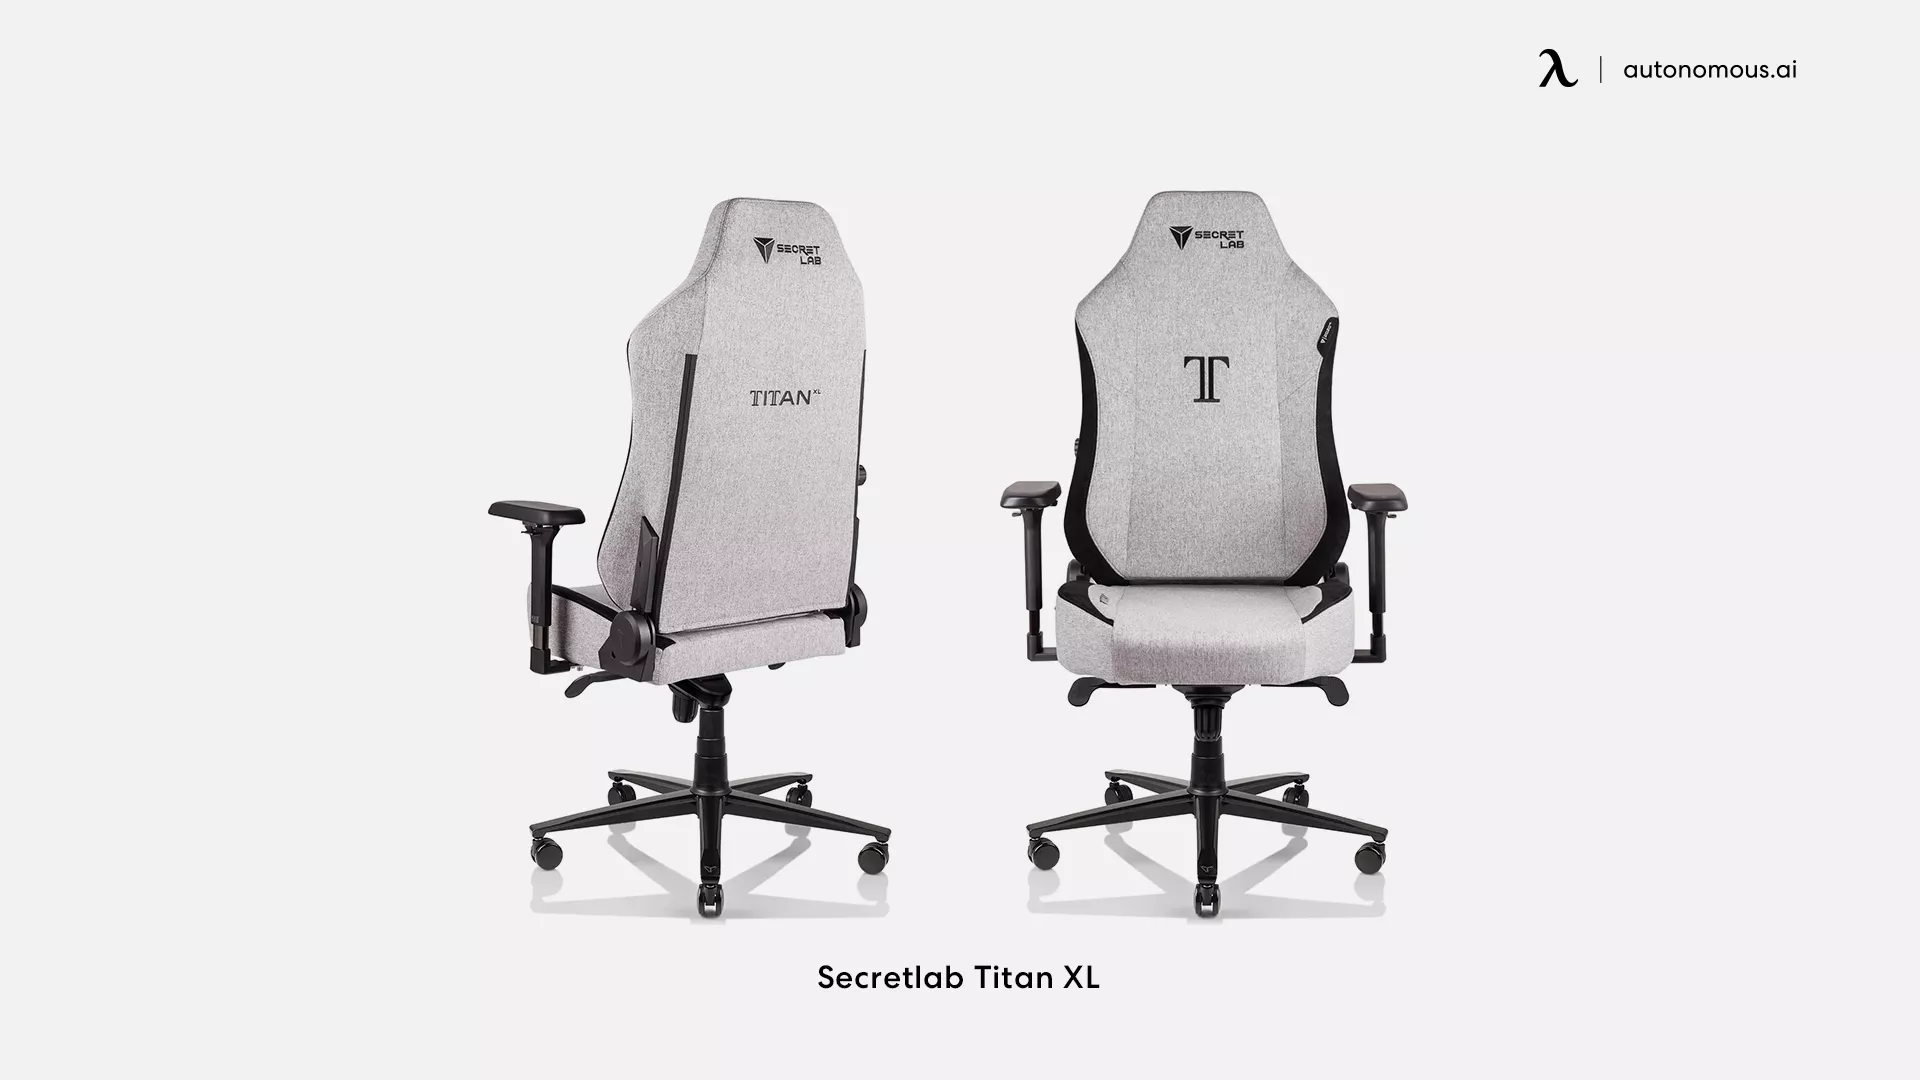 Secretlab Titan Xl white gaming chair